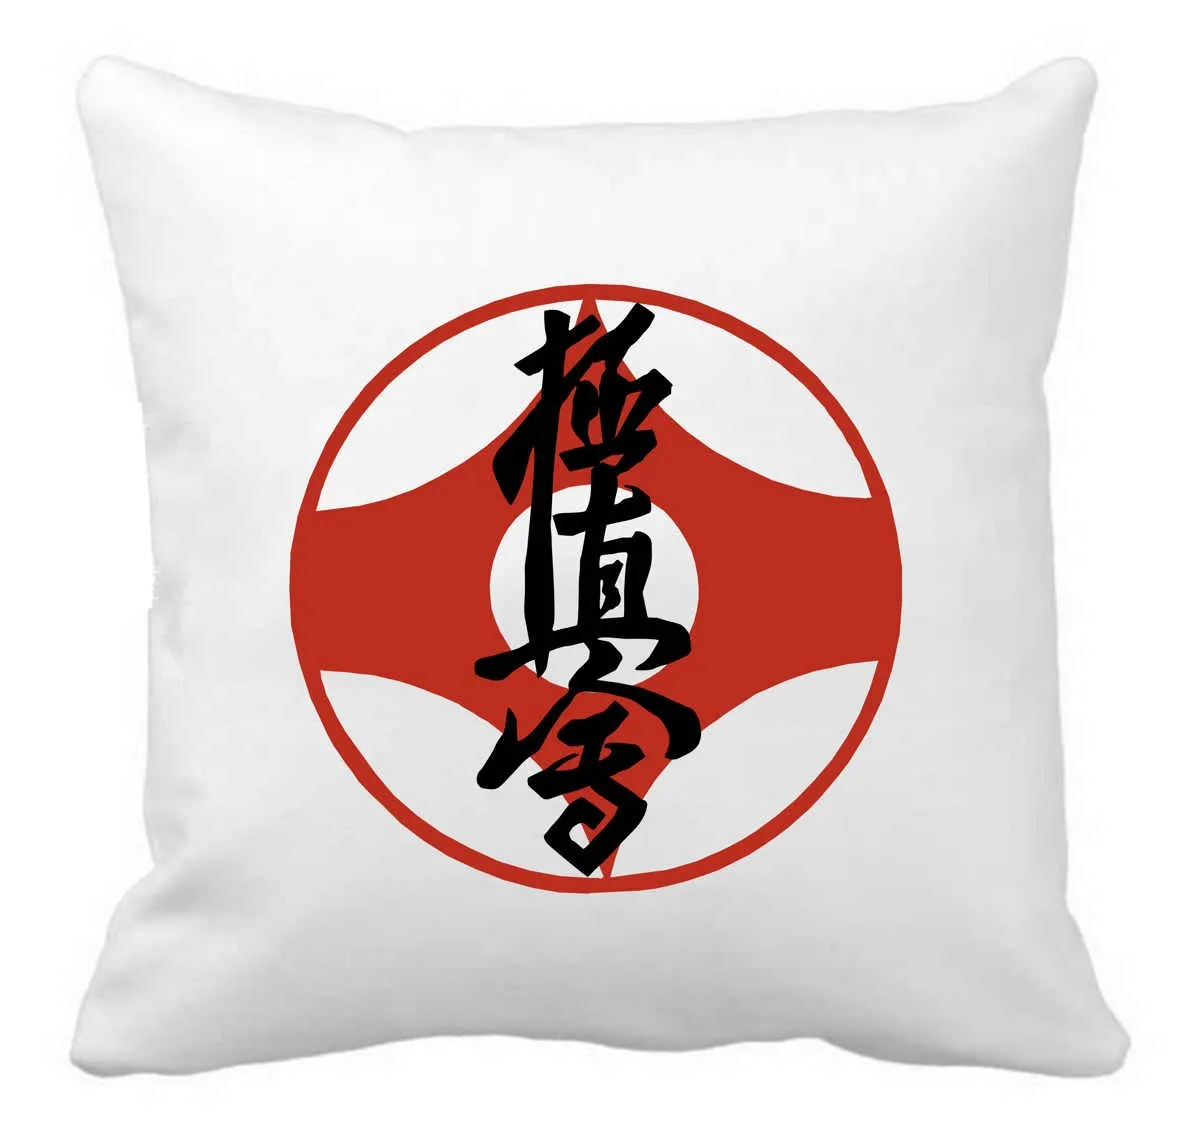 Kyokushinkai cushion